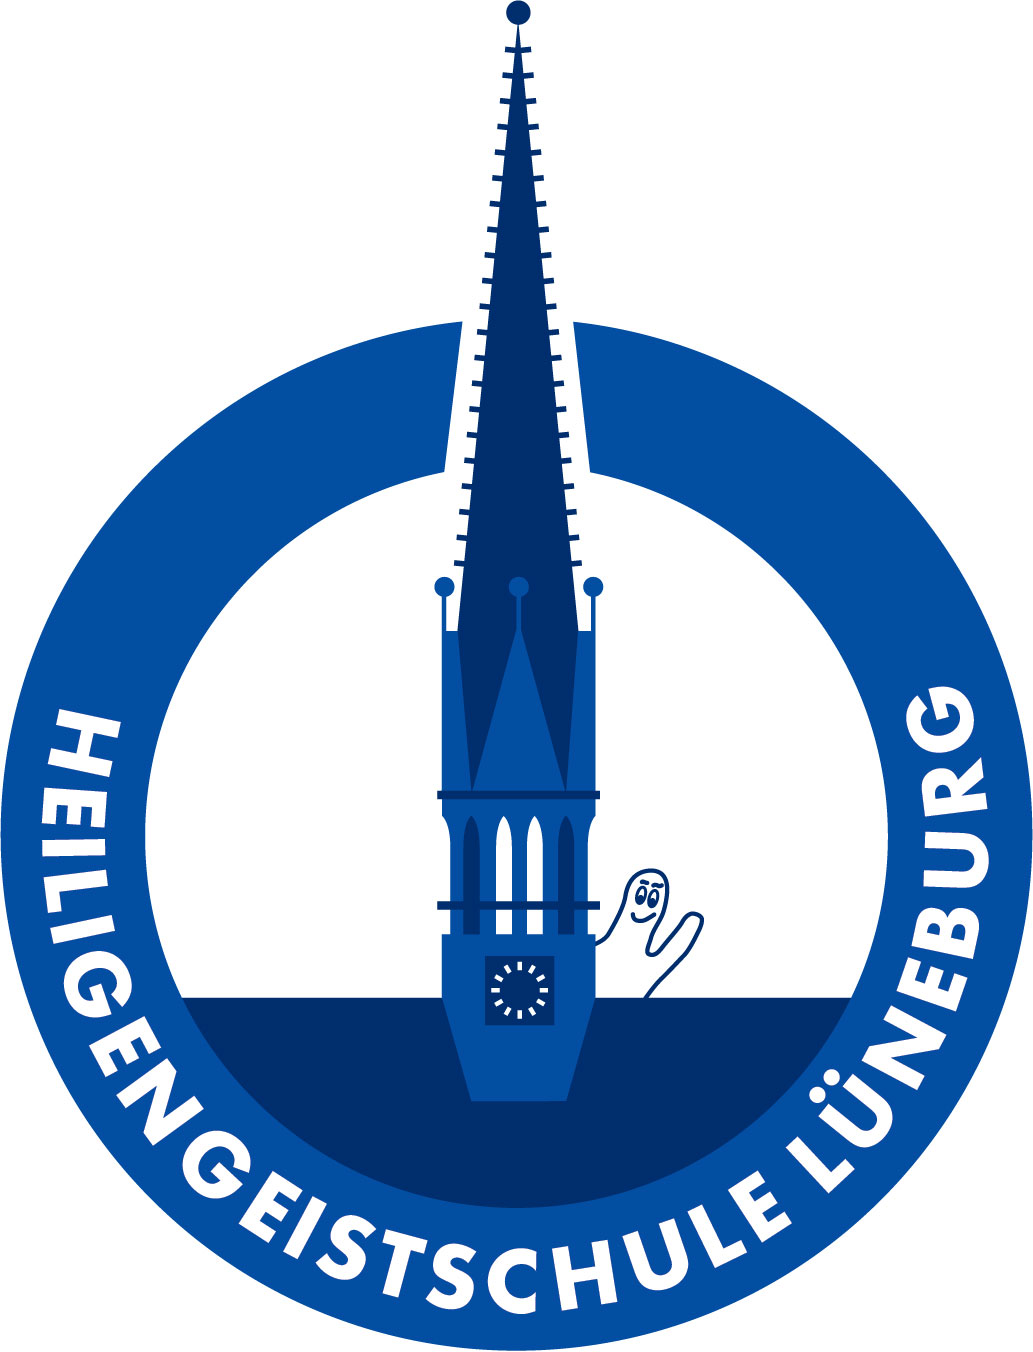 Heiligengeistschule Lüneburg